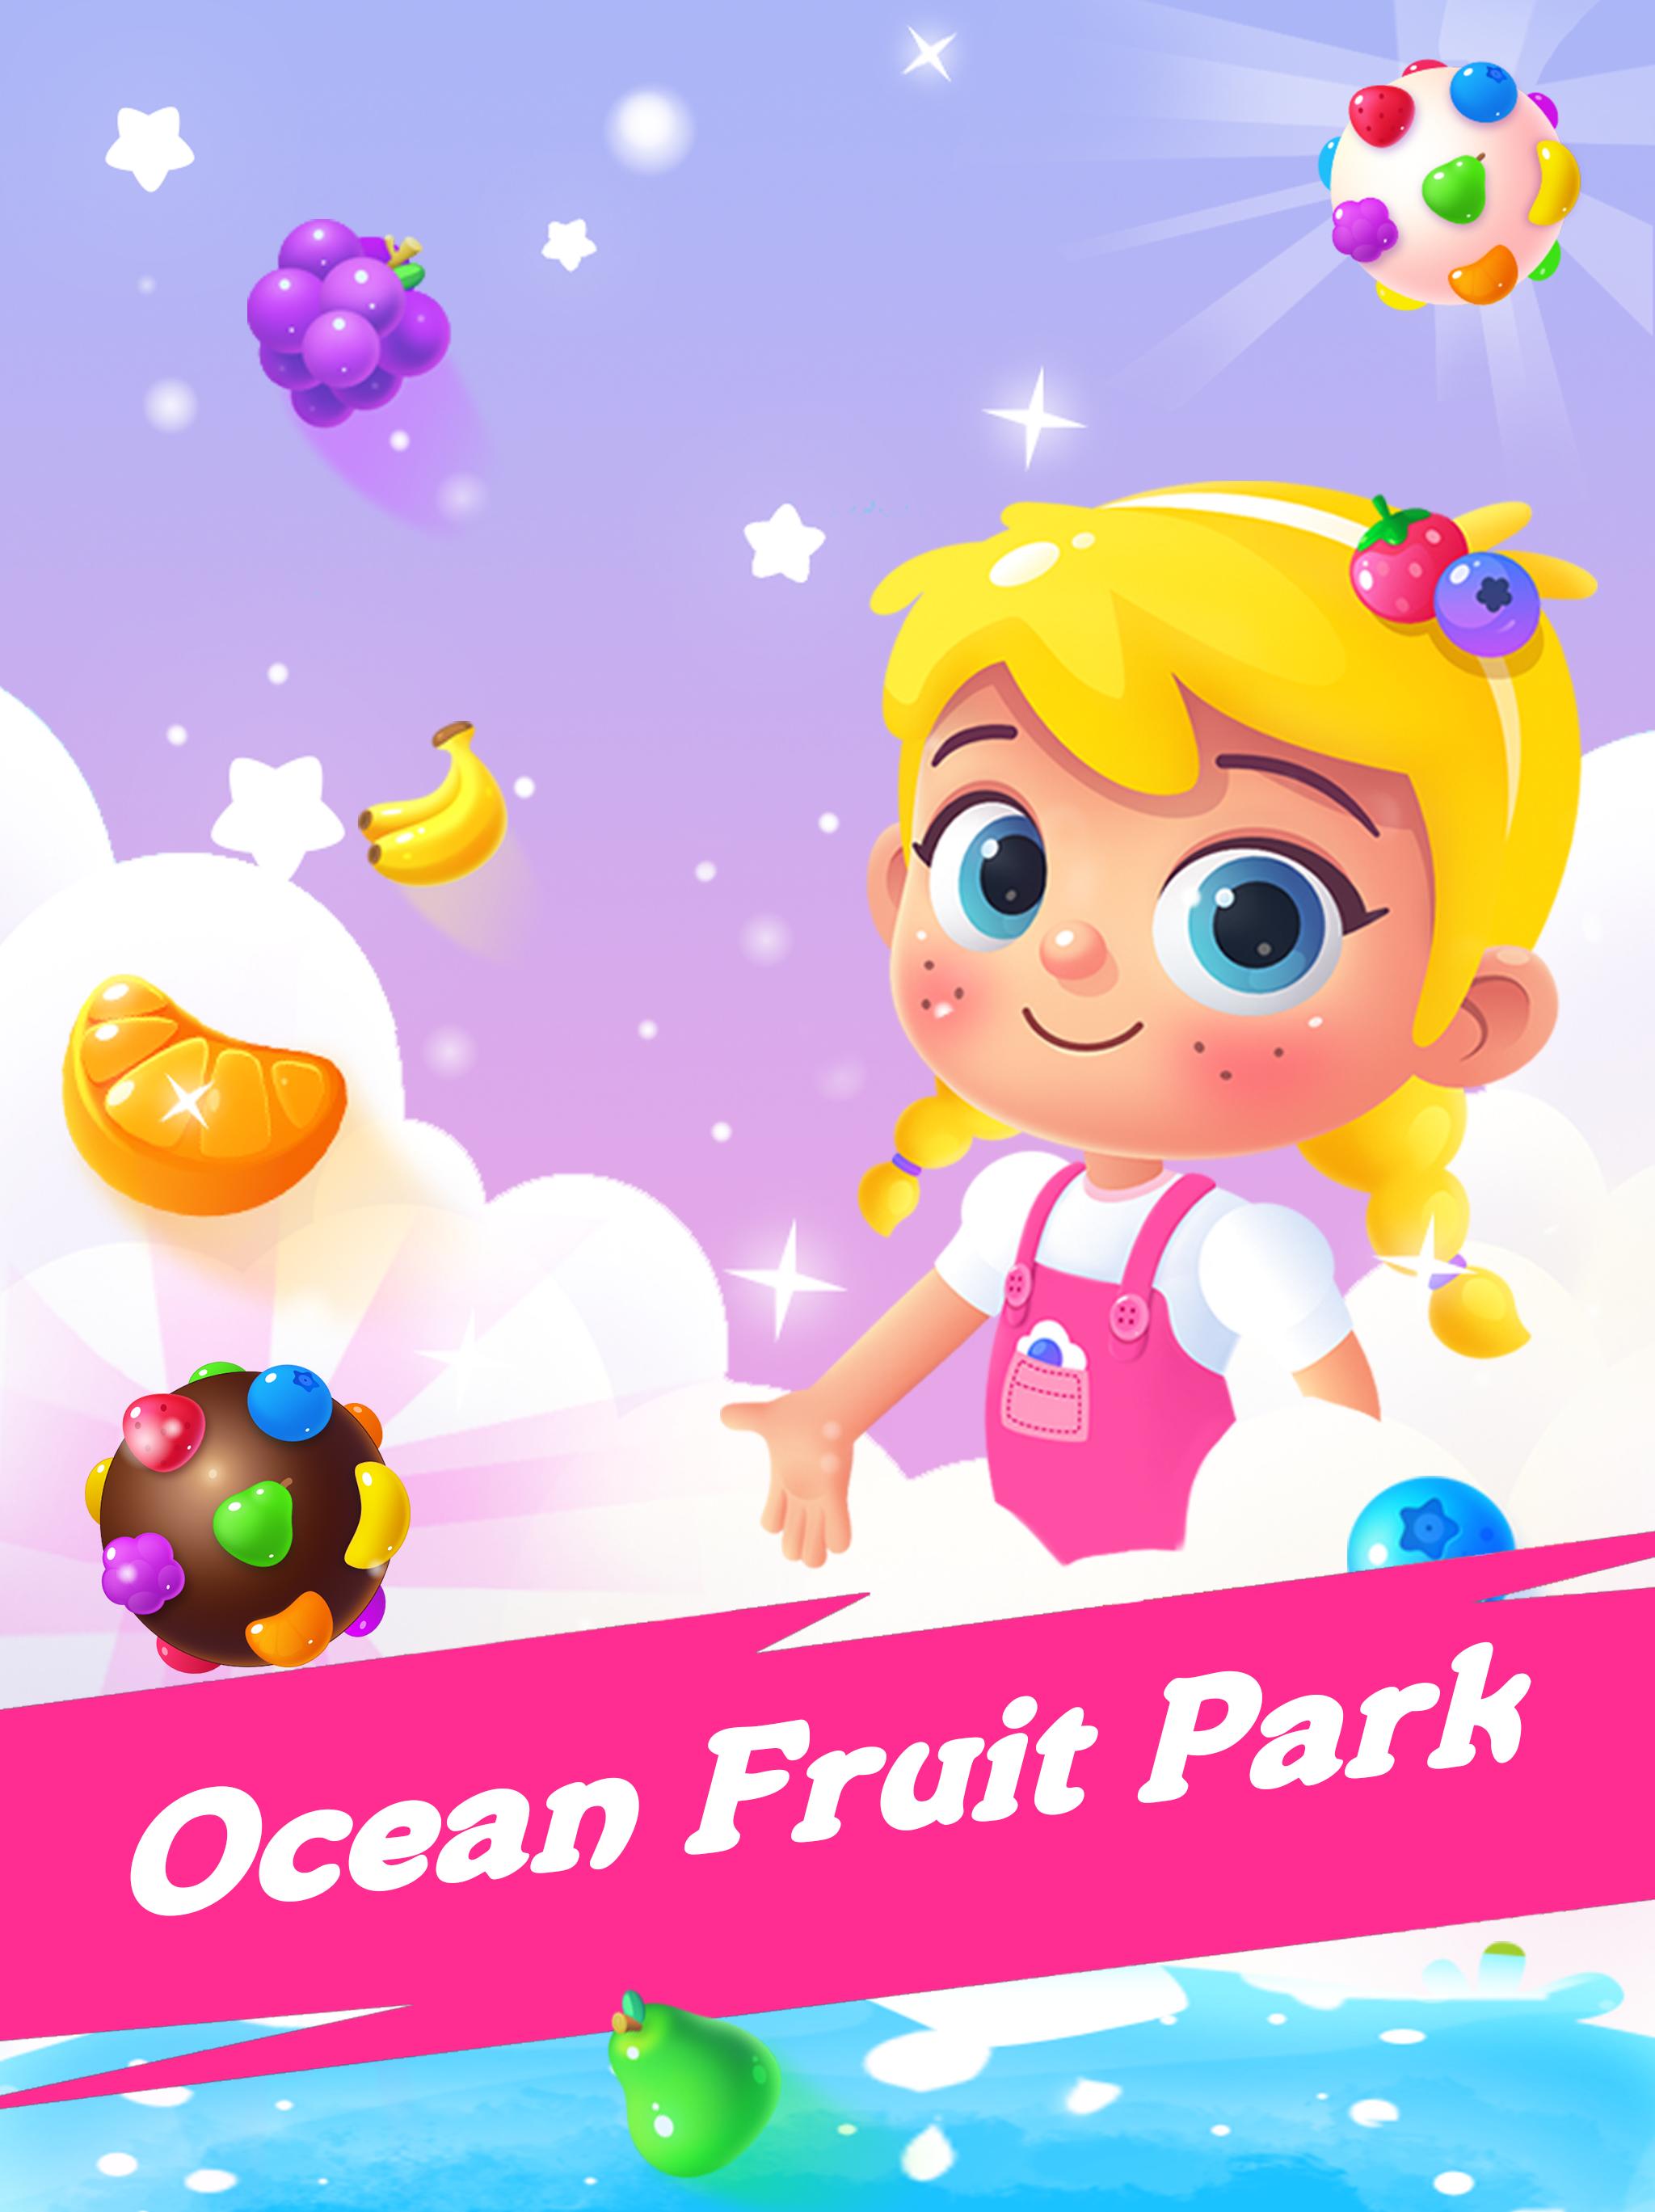 Ocean Fruit Park